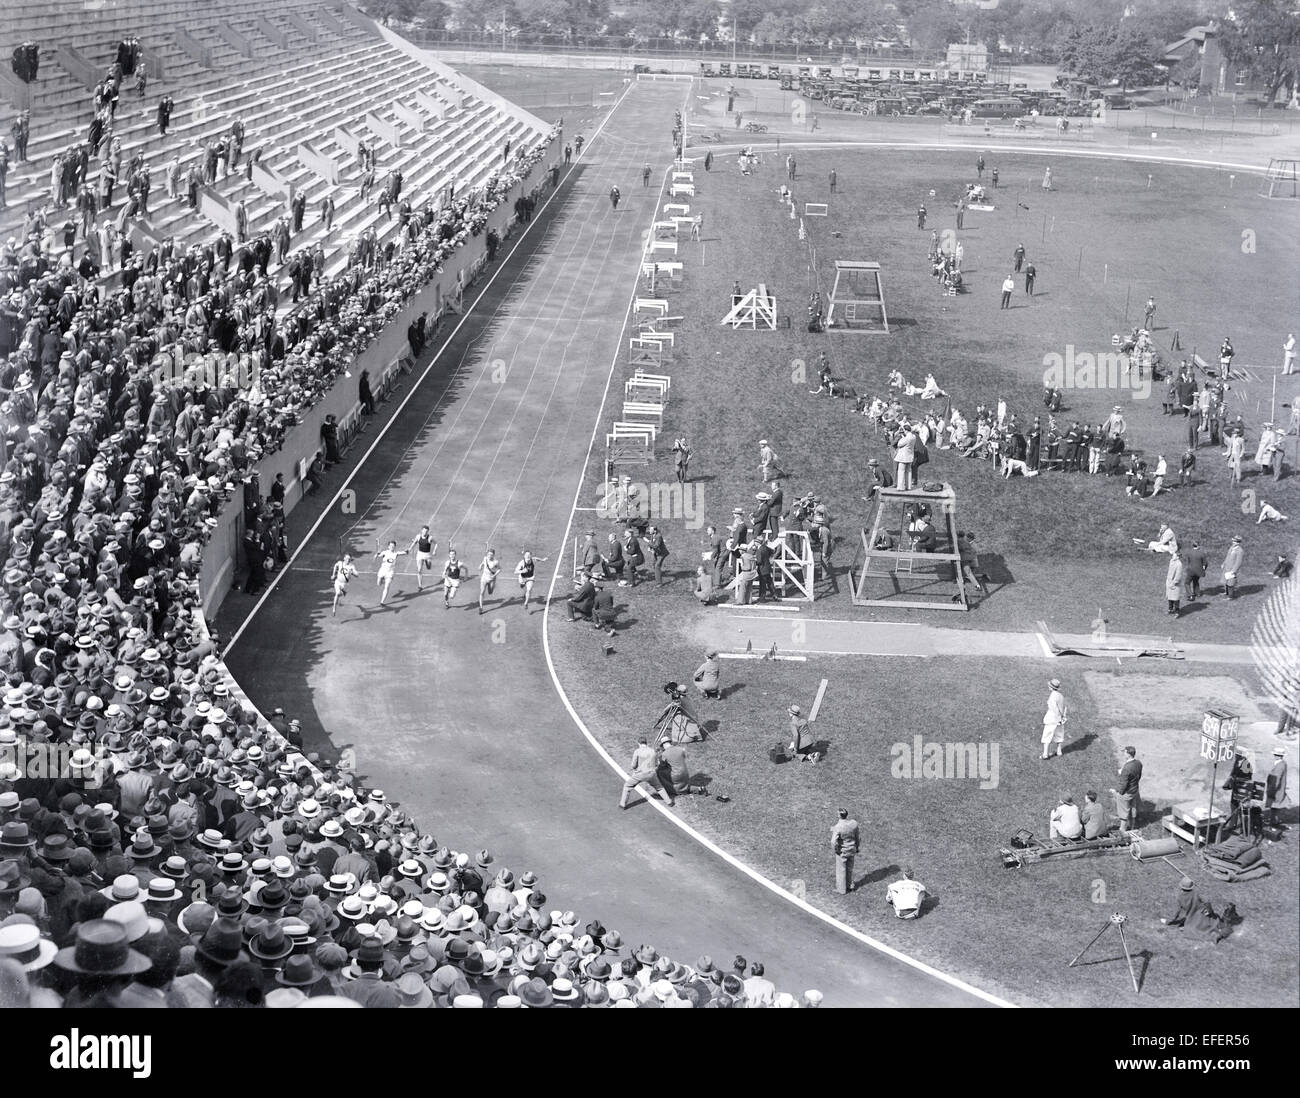 Antique c1915 photograph, track meet at Harvard Stadium, Harvard University, Cambridge, Boston, Massachusetts, USA. Stock Photo